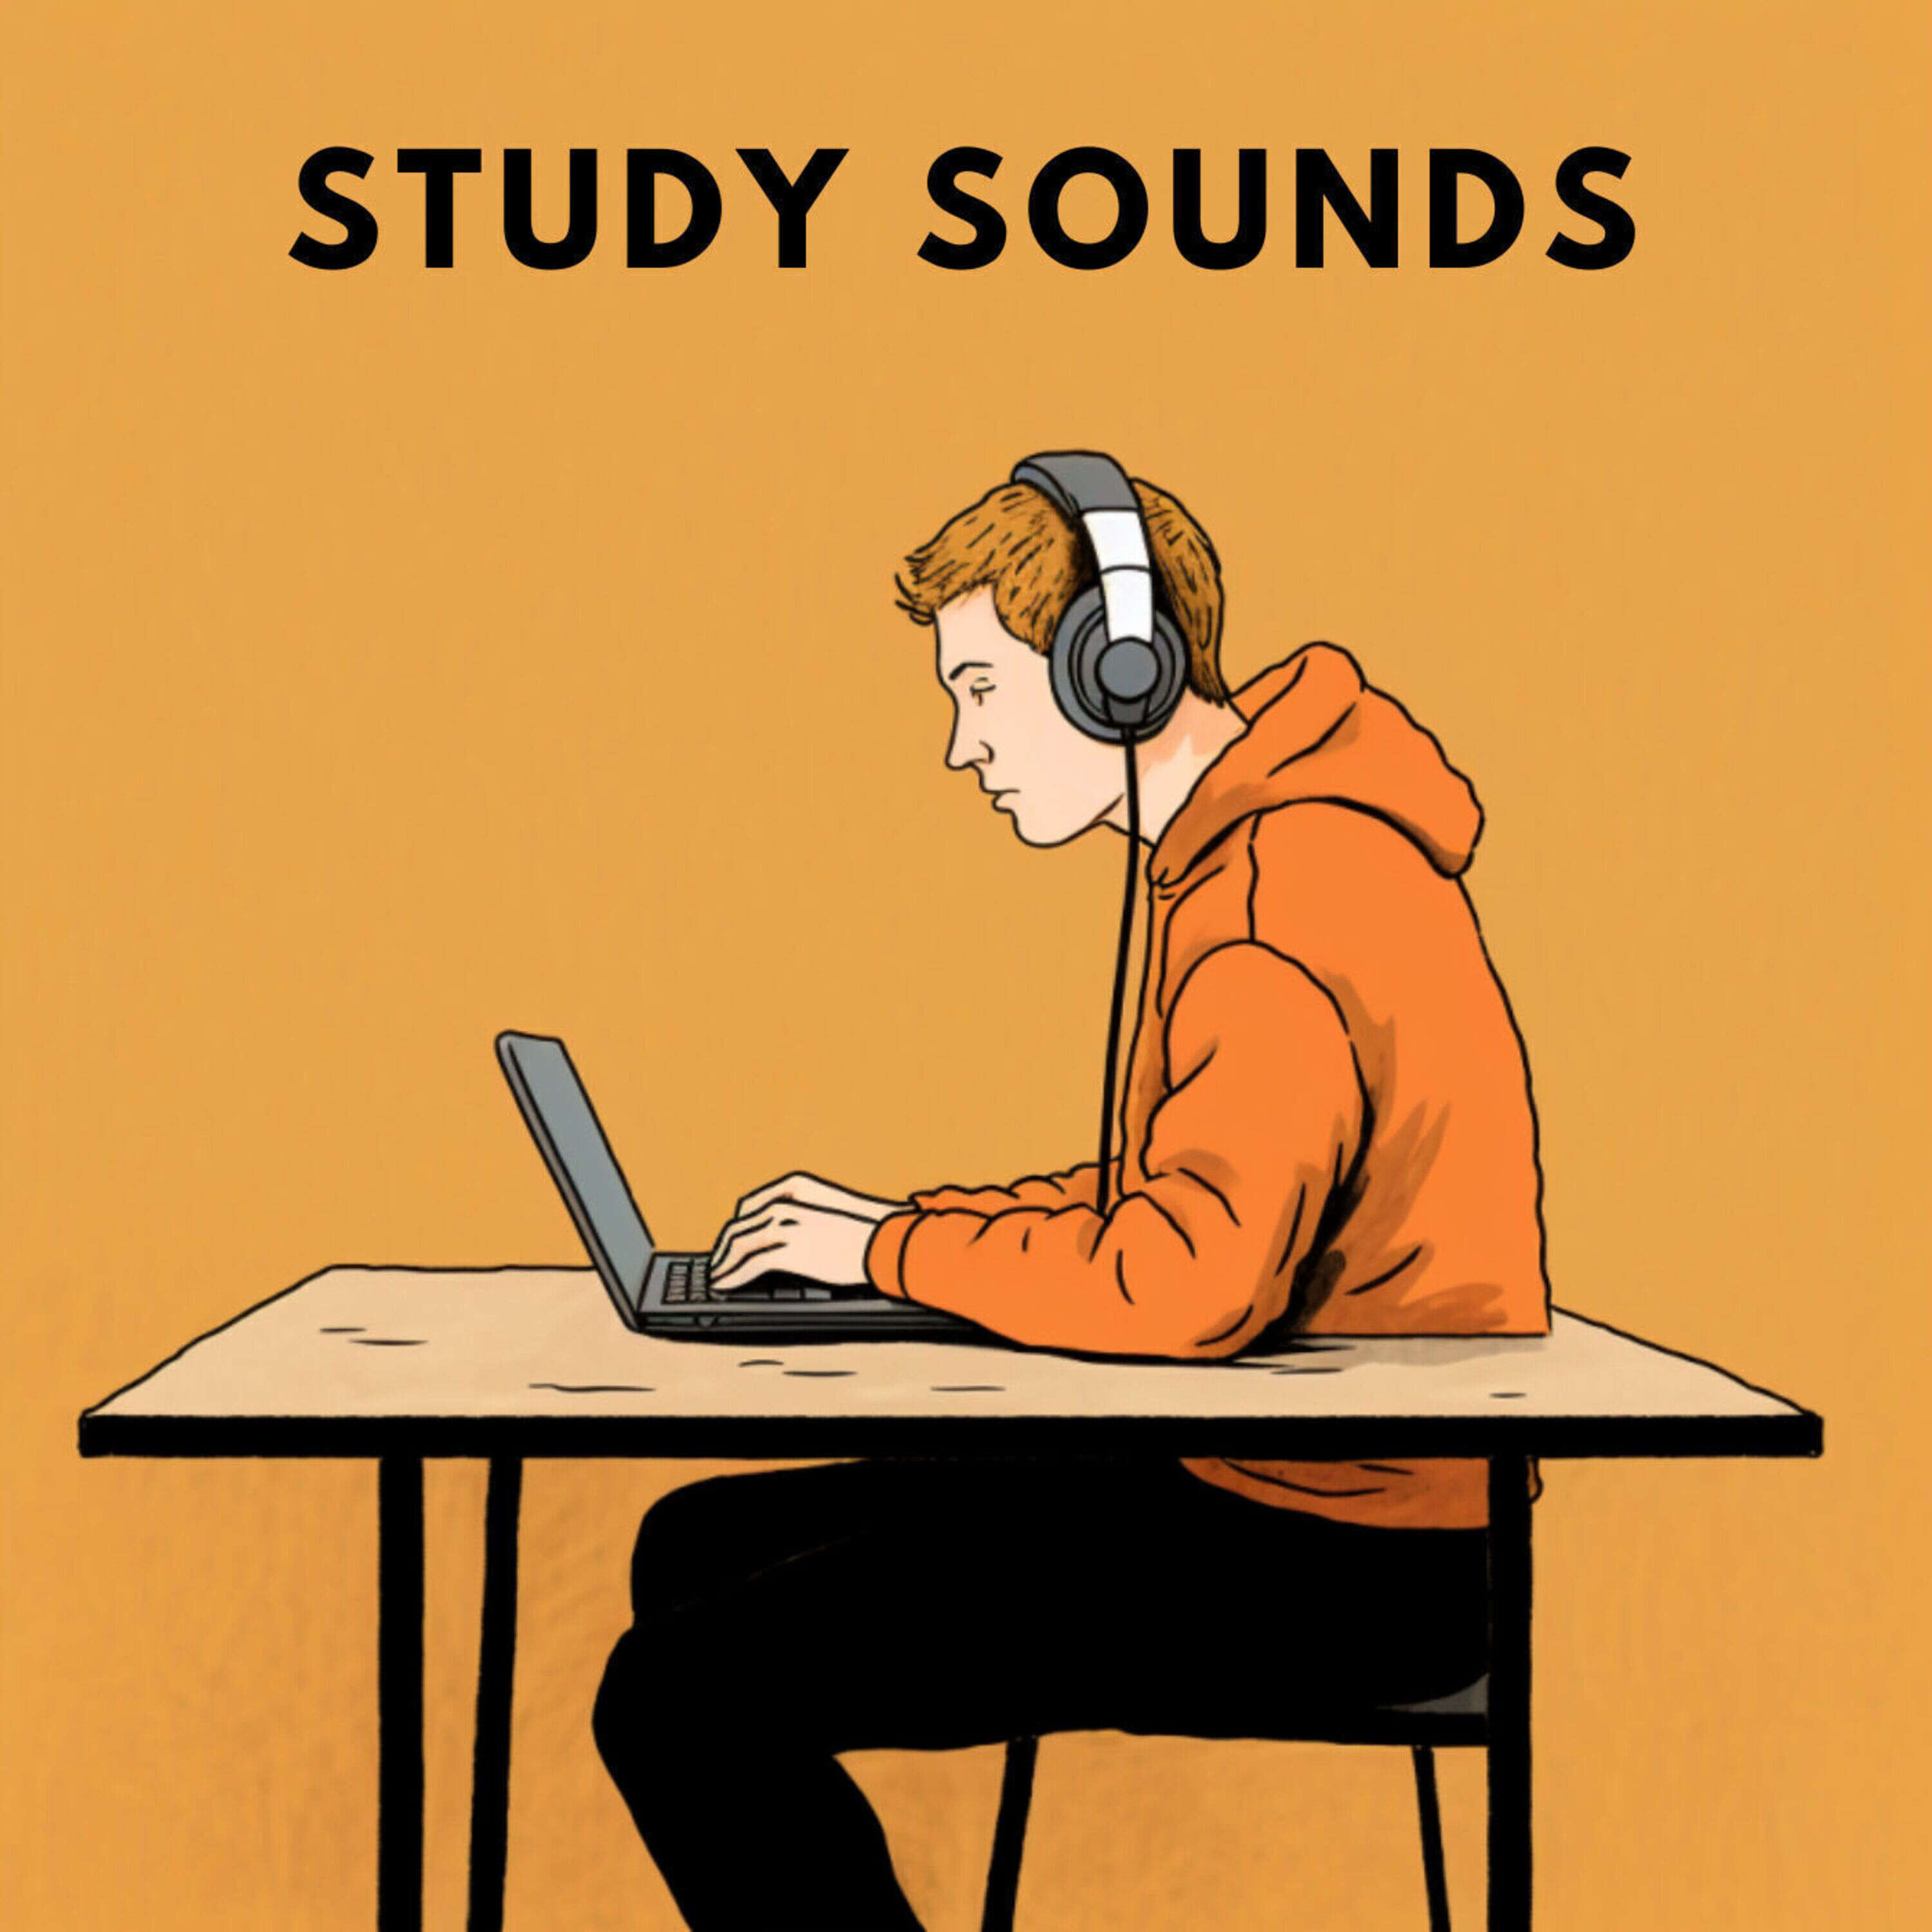 Best Instrumental Sounds For Work, Study Sounds